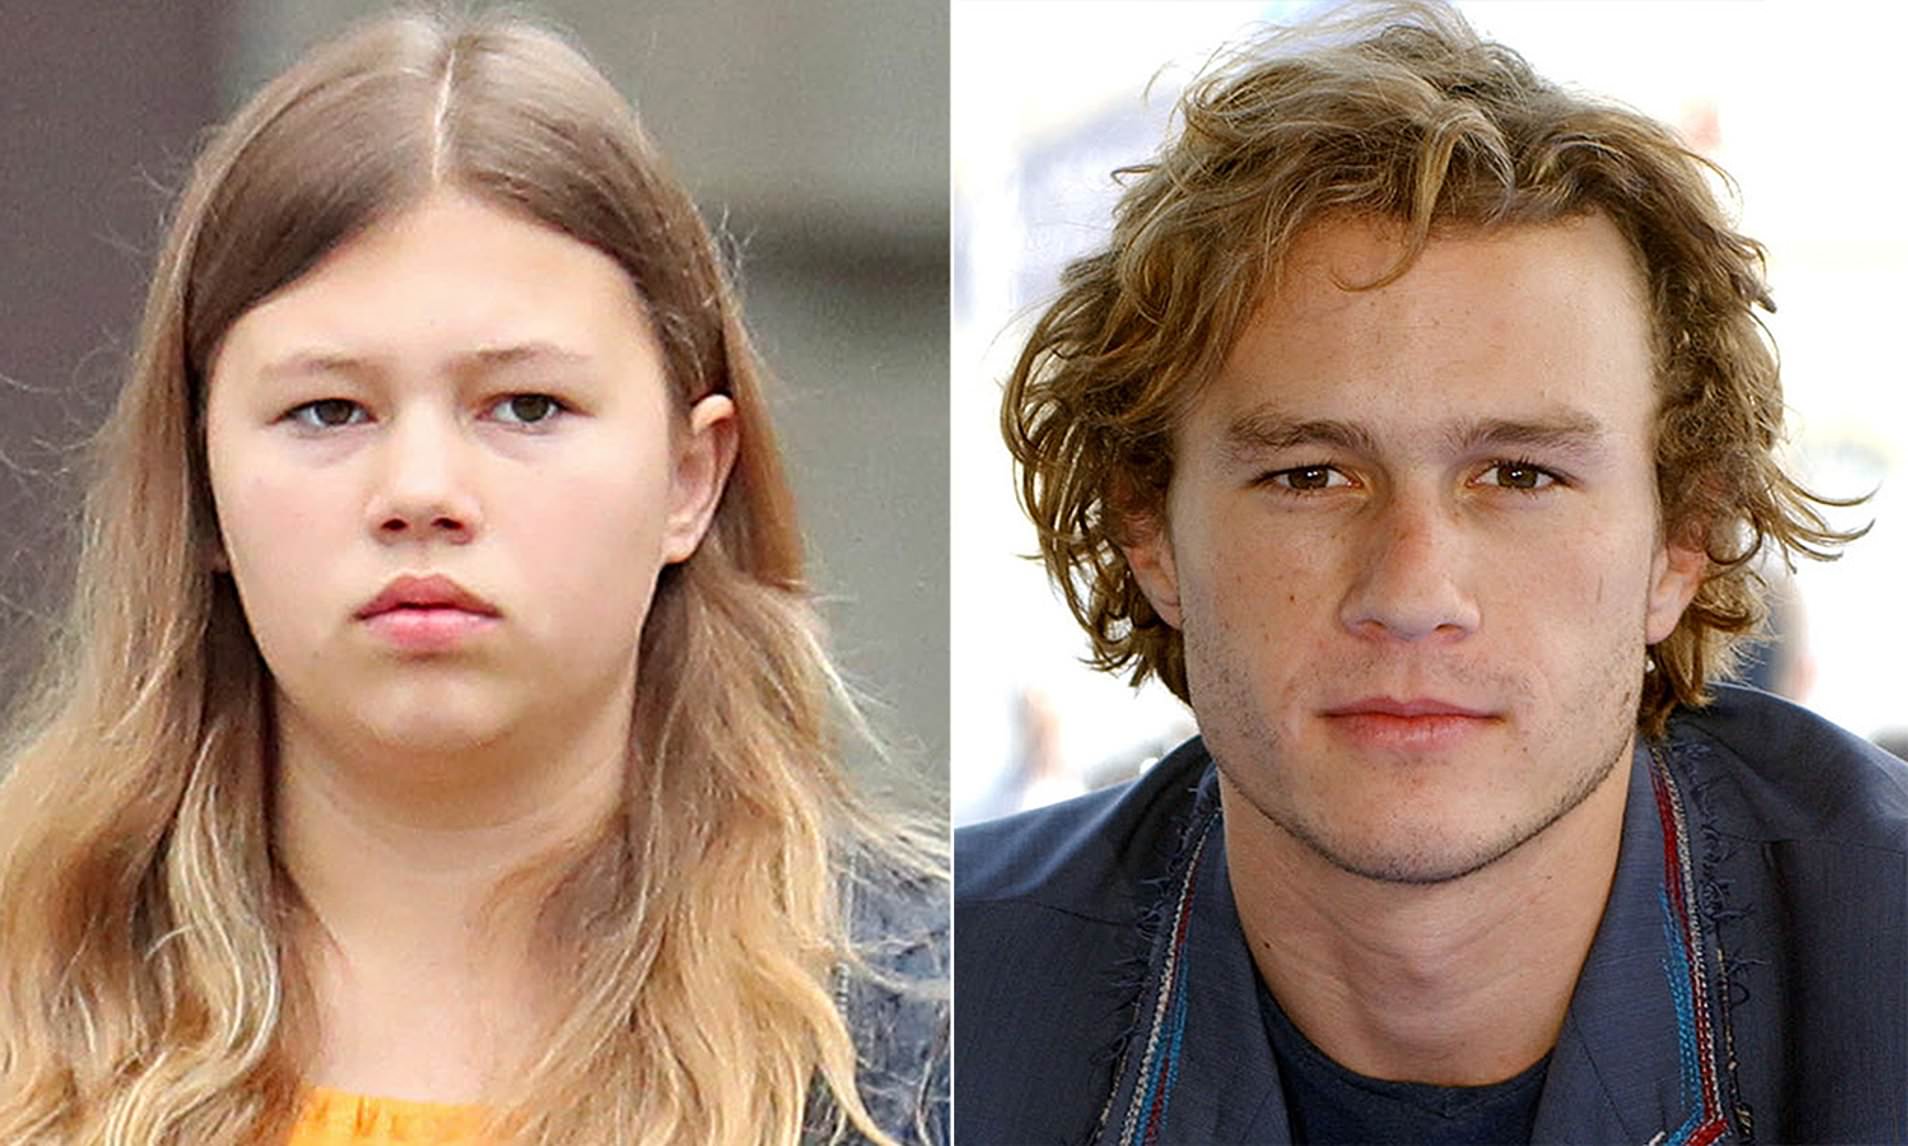 Heath Ledger's daughter Matilda looks just like him in rare photos